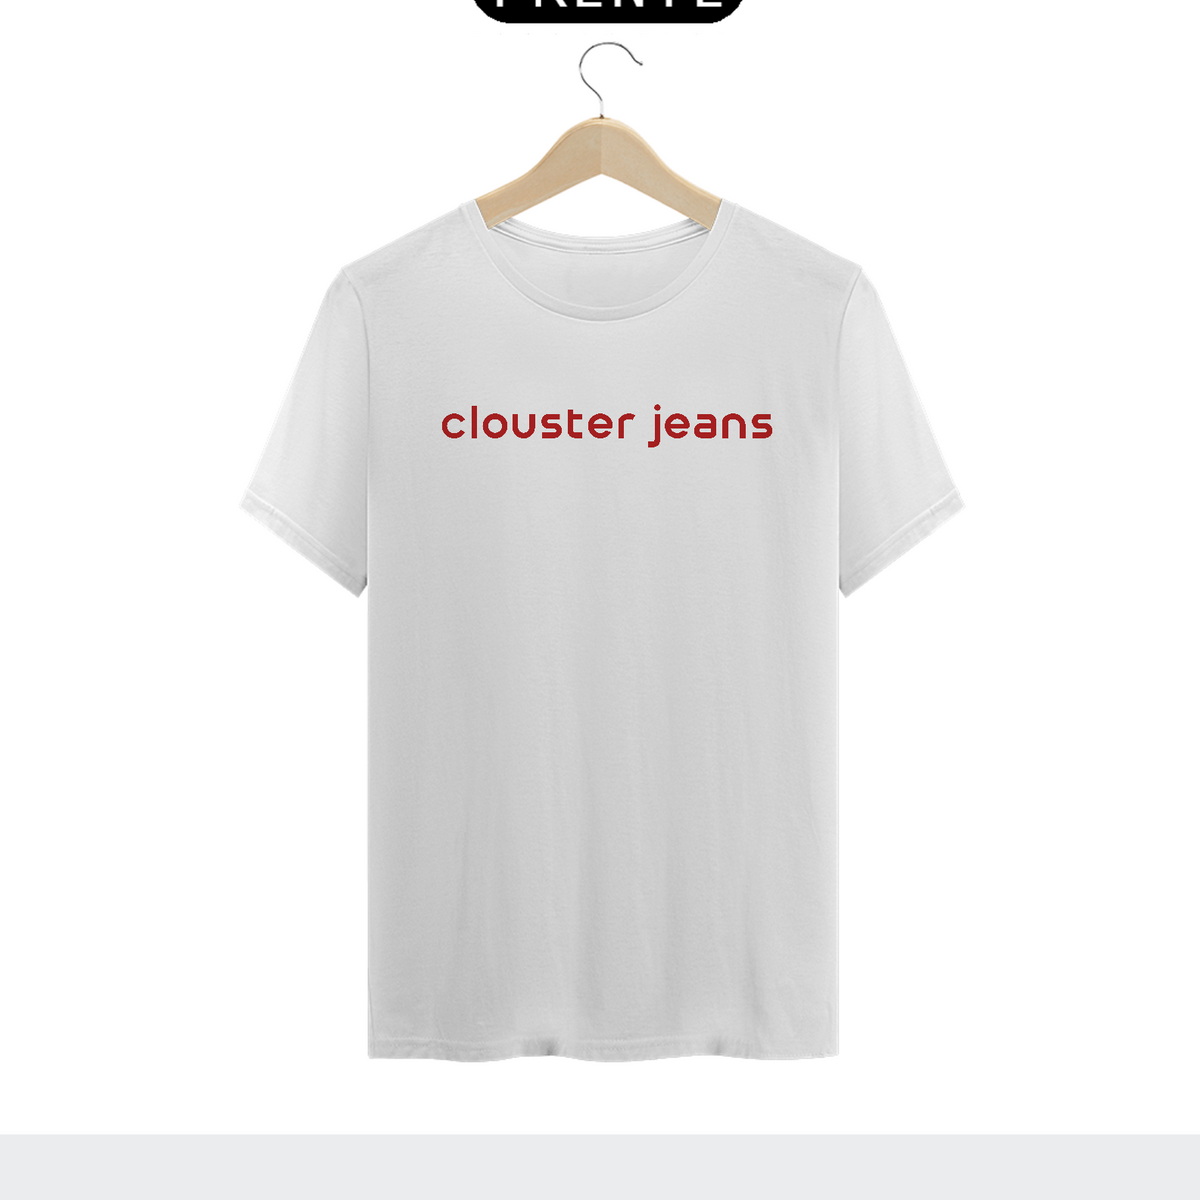 Nome do produto: Camiseta CLOUSTER Jeans 005 masculino